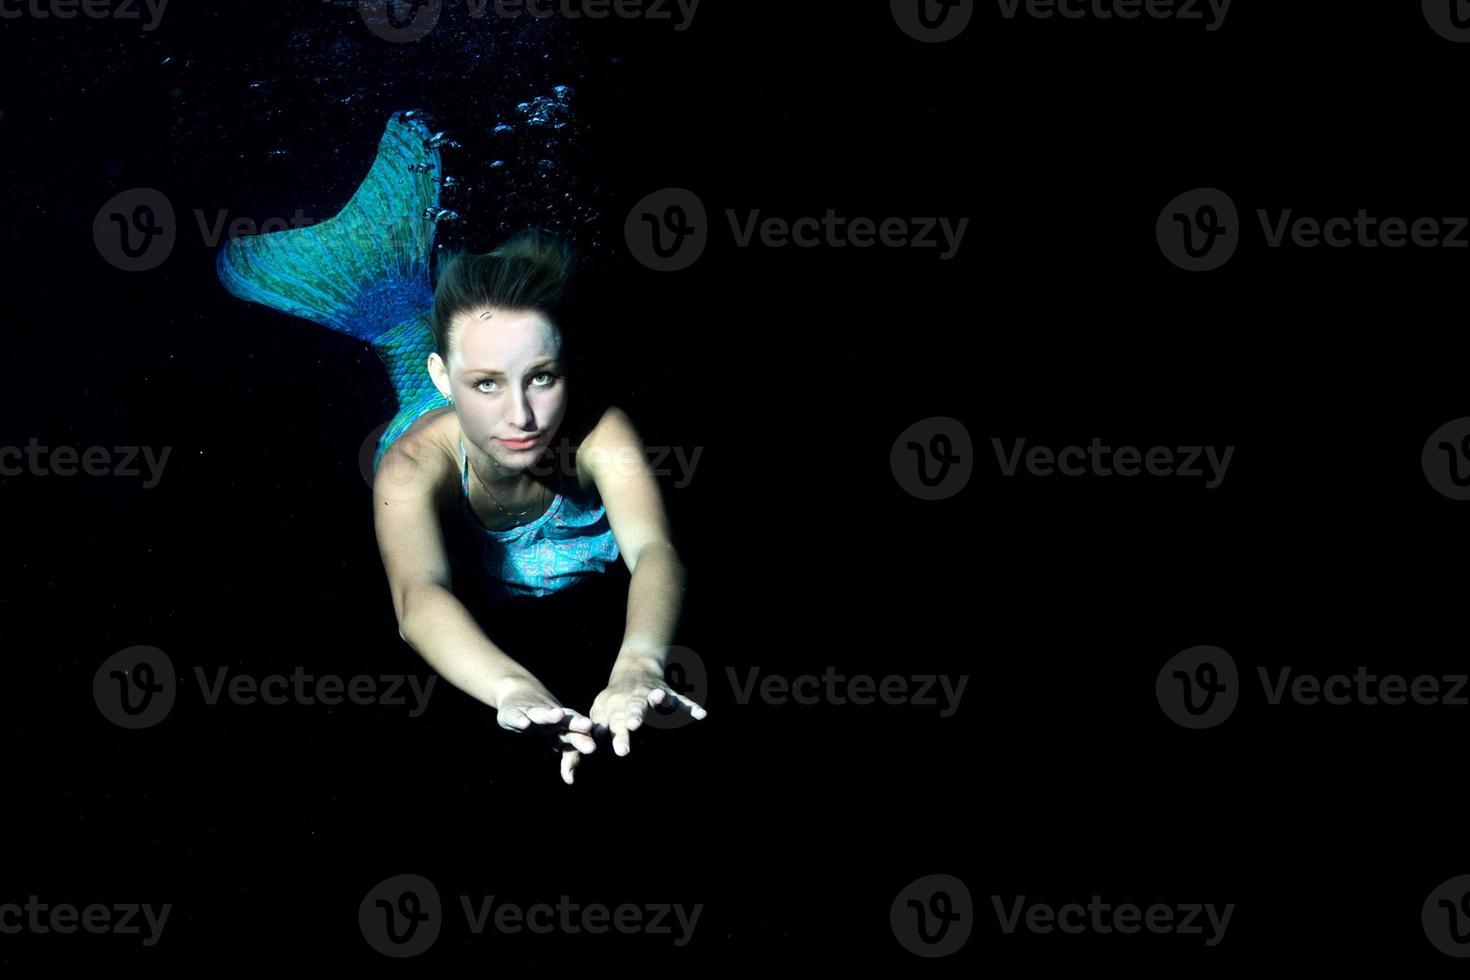 loira linda sereia mergulhador debaixo d'água foto